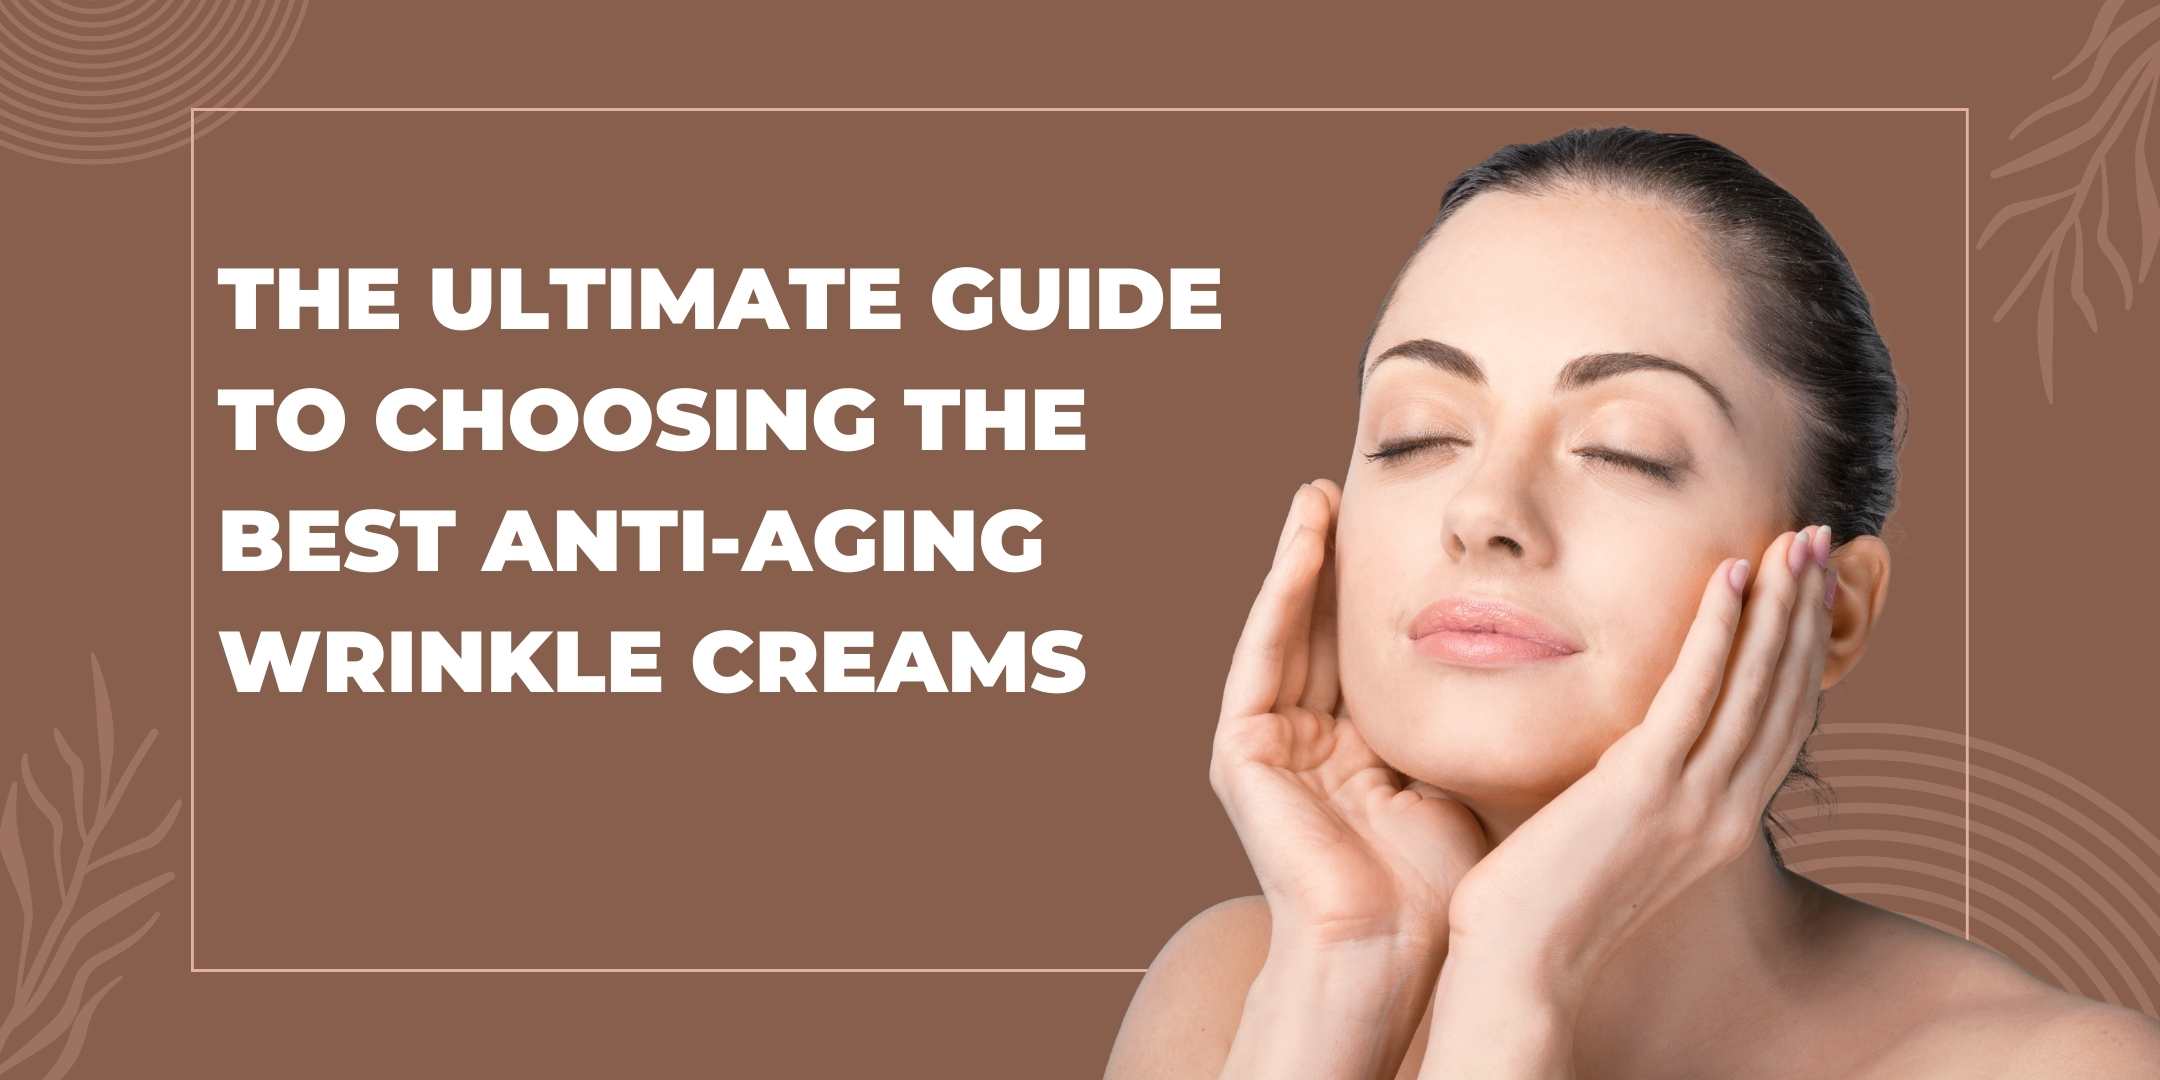 The Ultimate Guide to Choosing the Best Anti-Aging Wrinkle Creams